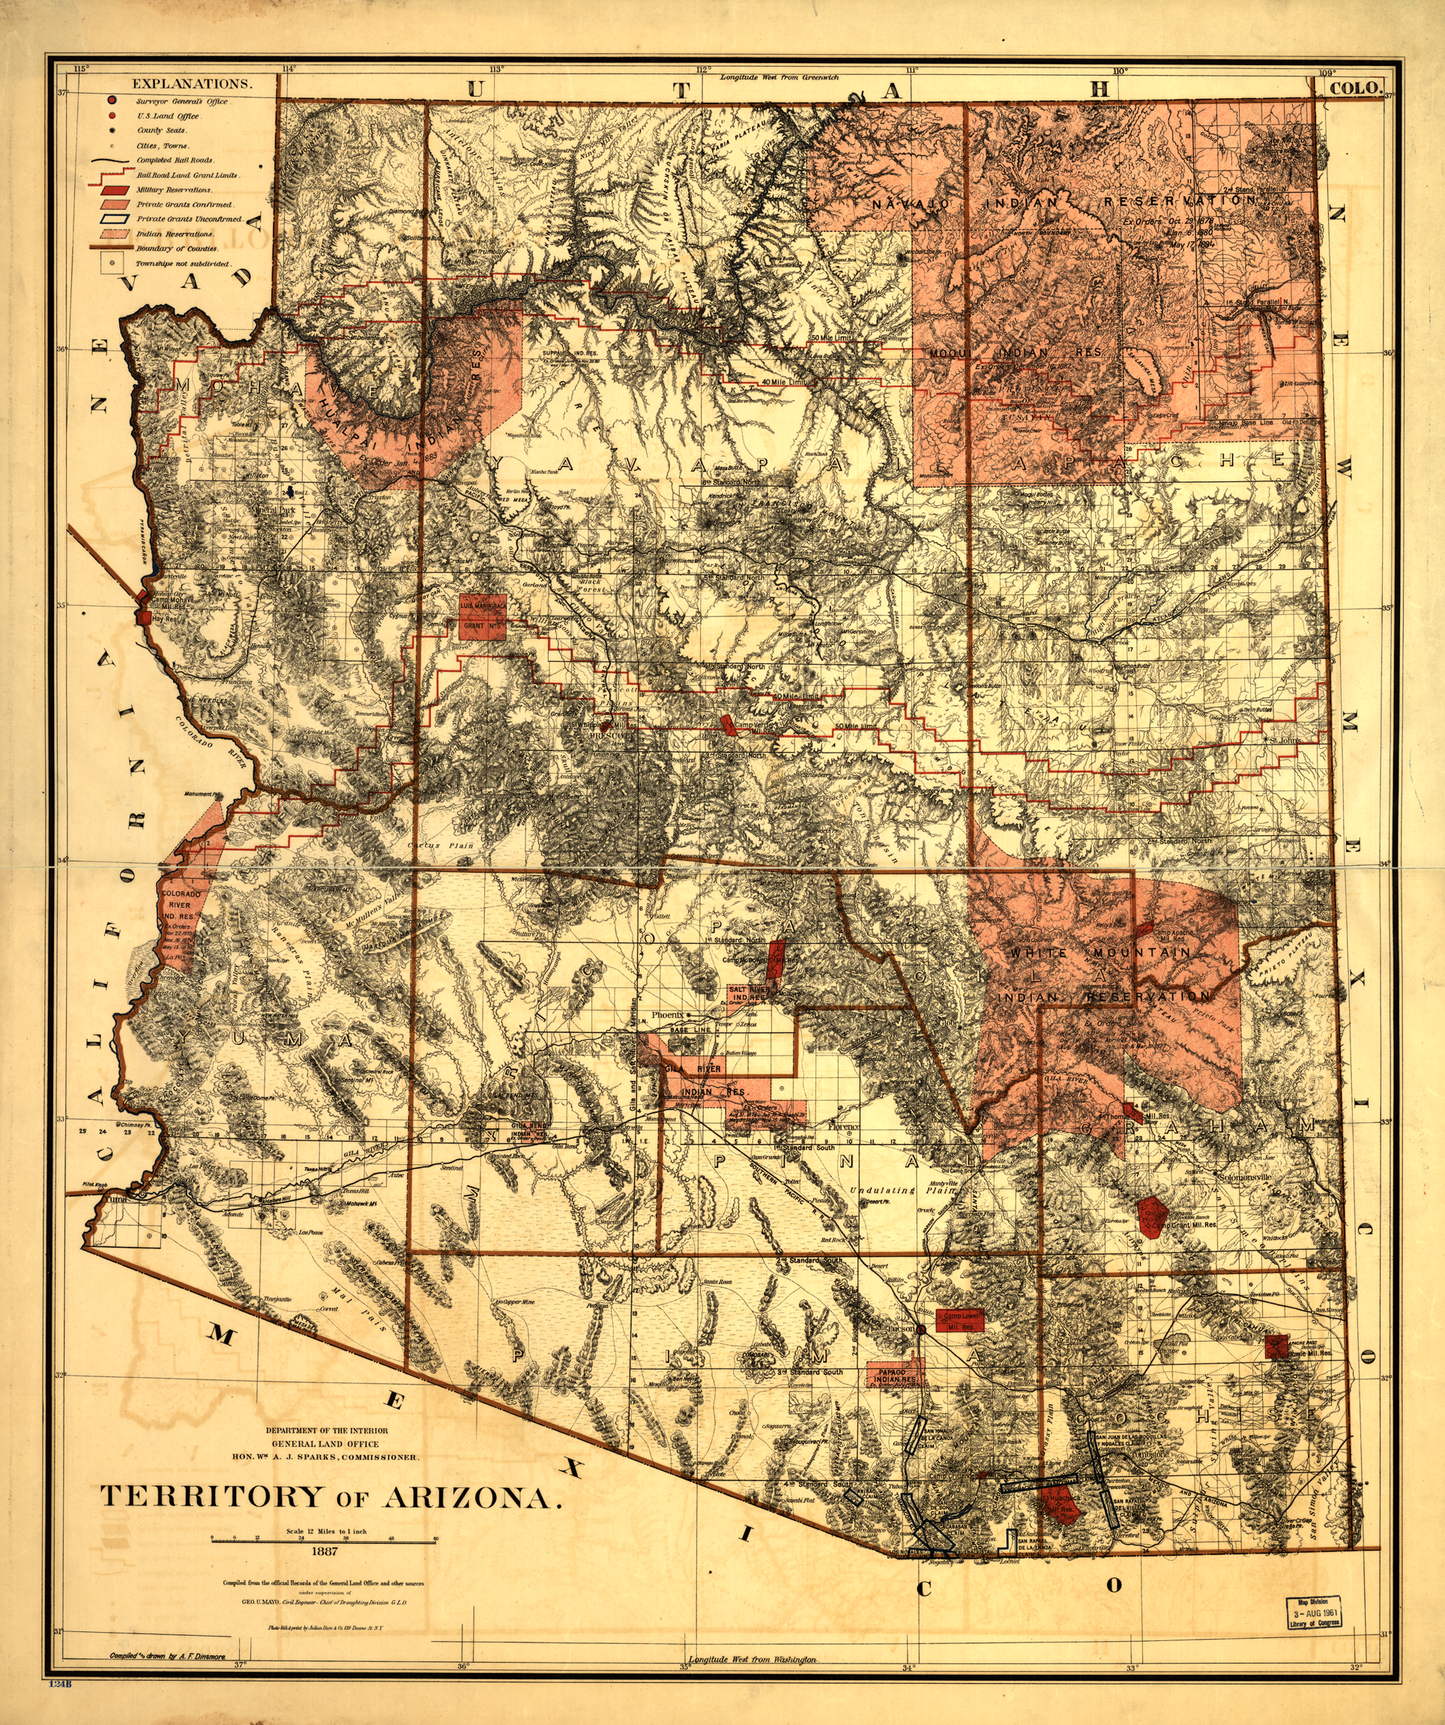 1887 Map of the Territory of Arizona